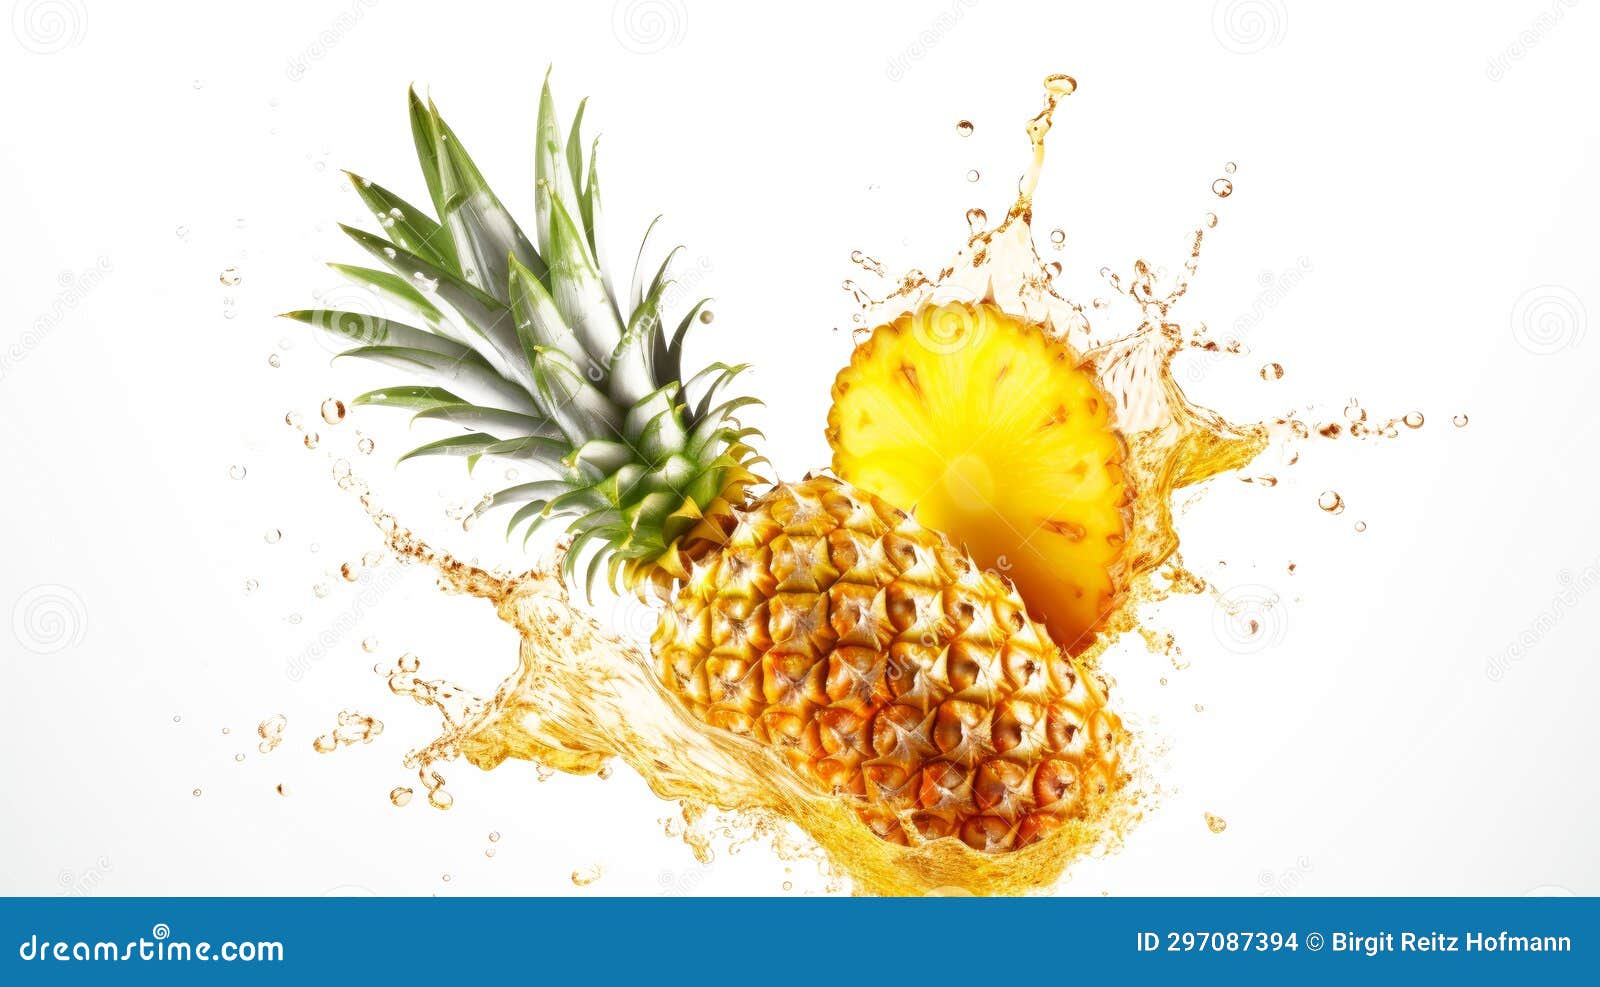 pineapple water spash